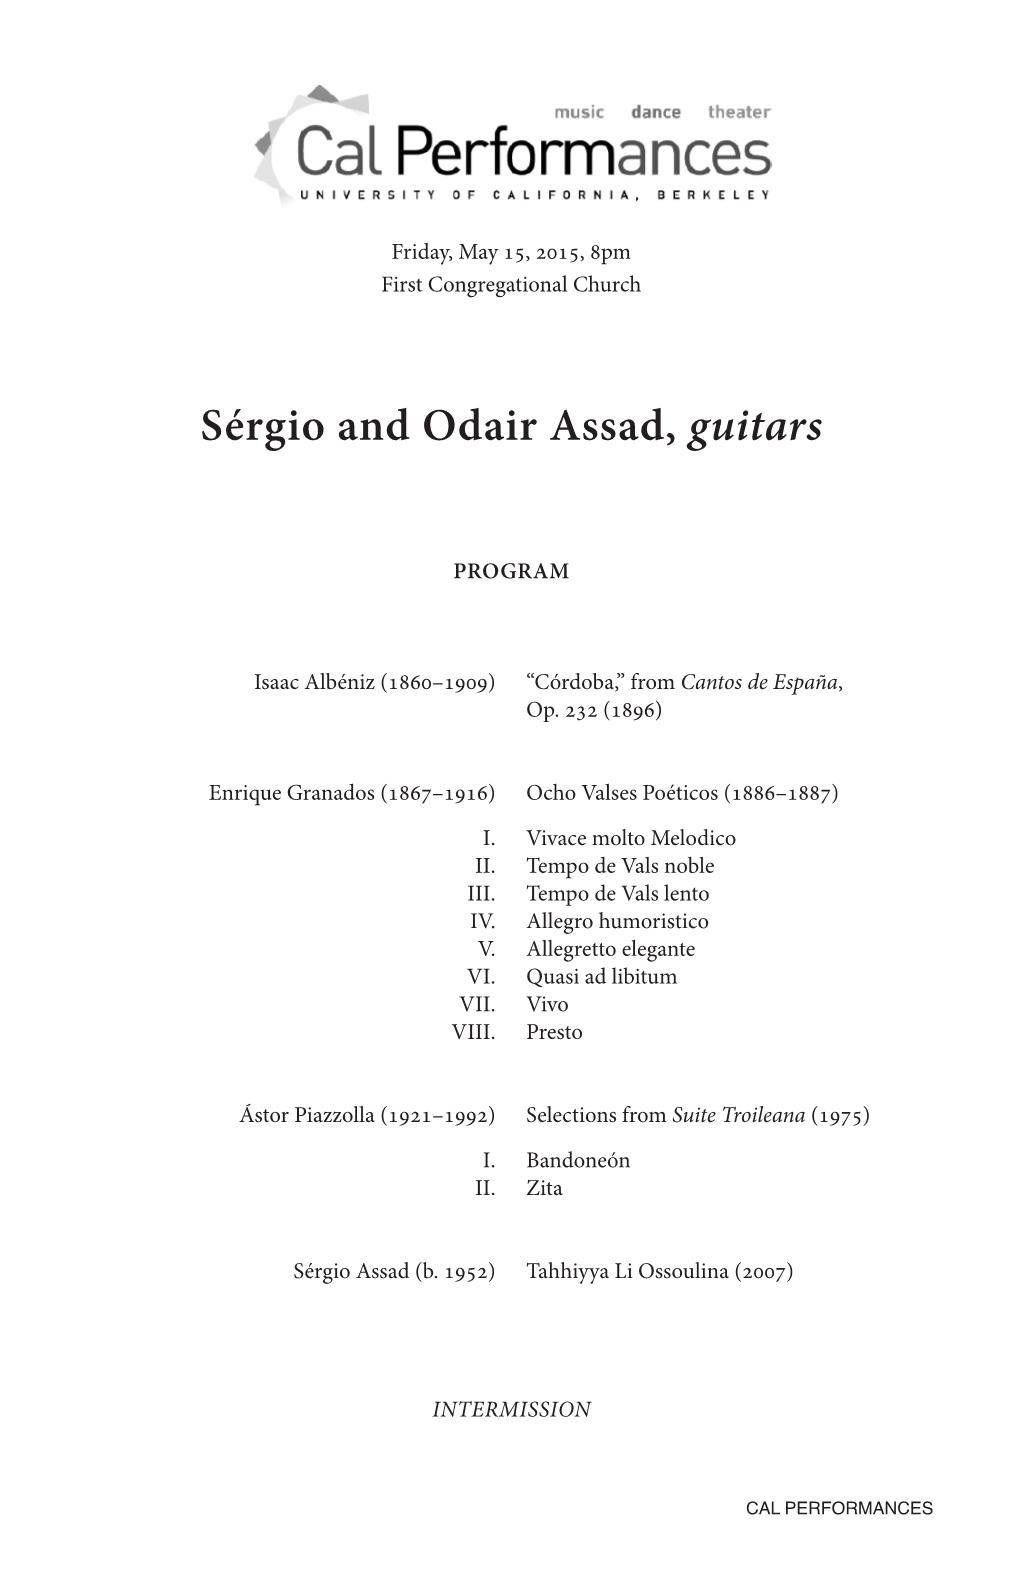 Sérgio and Odair Assad, Guitars